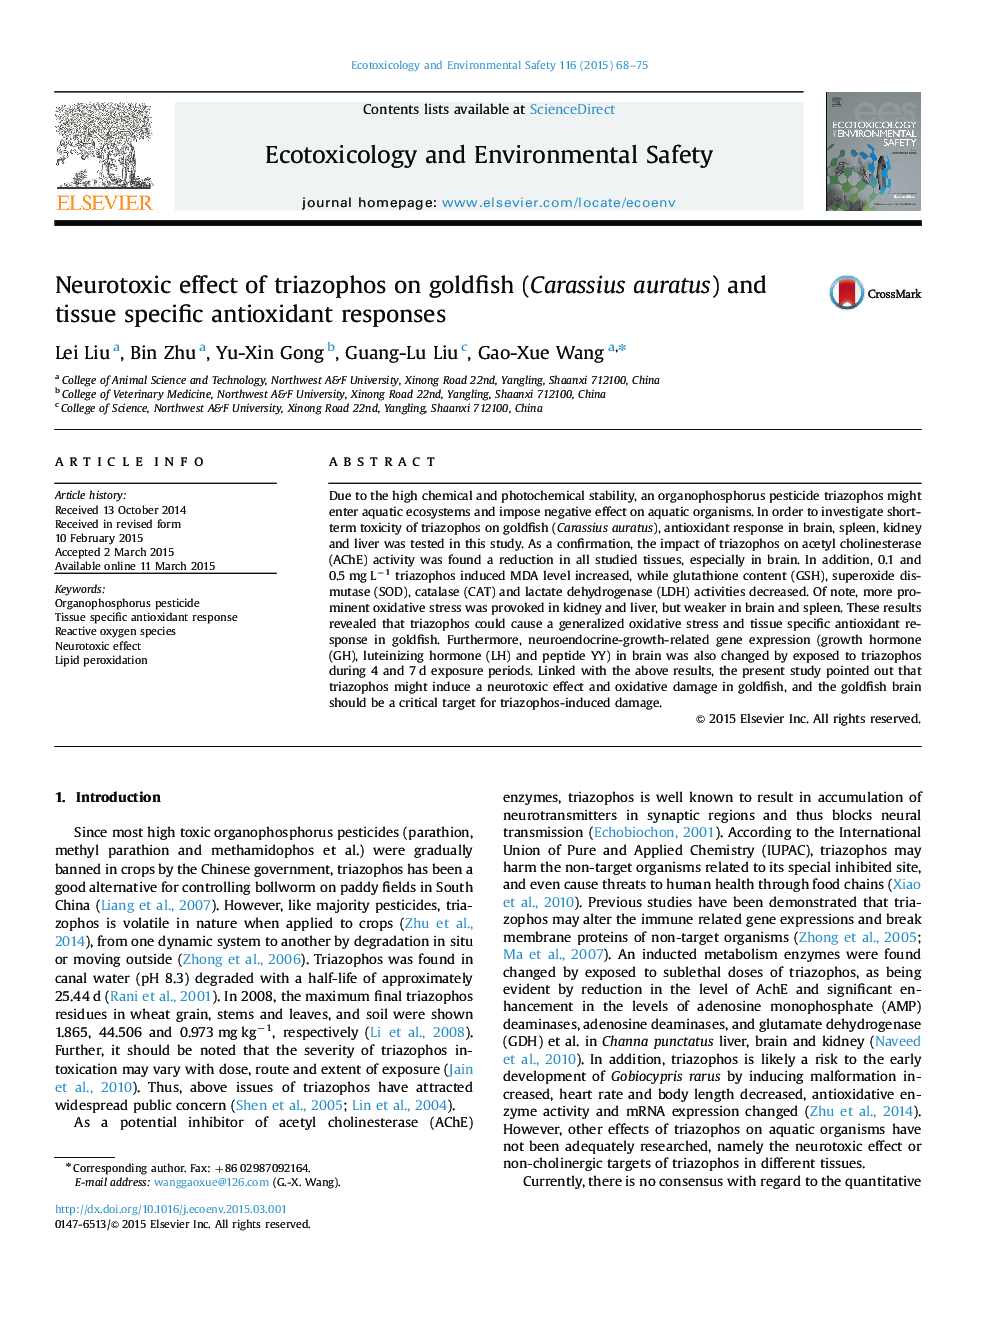 Neurotoxic effect of triazophos on goldfish (Carassius auratus) and tissue specific antioxidant responses